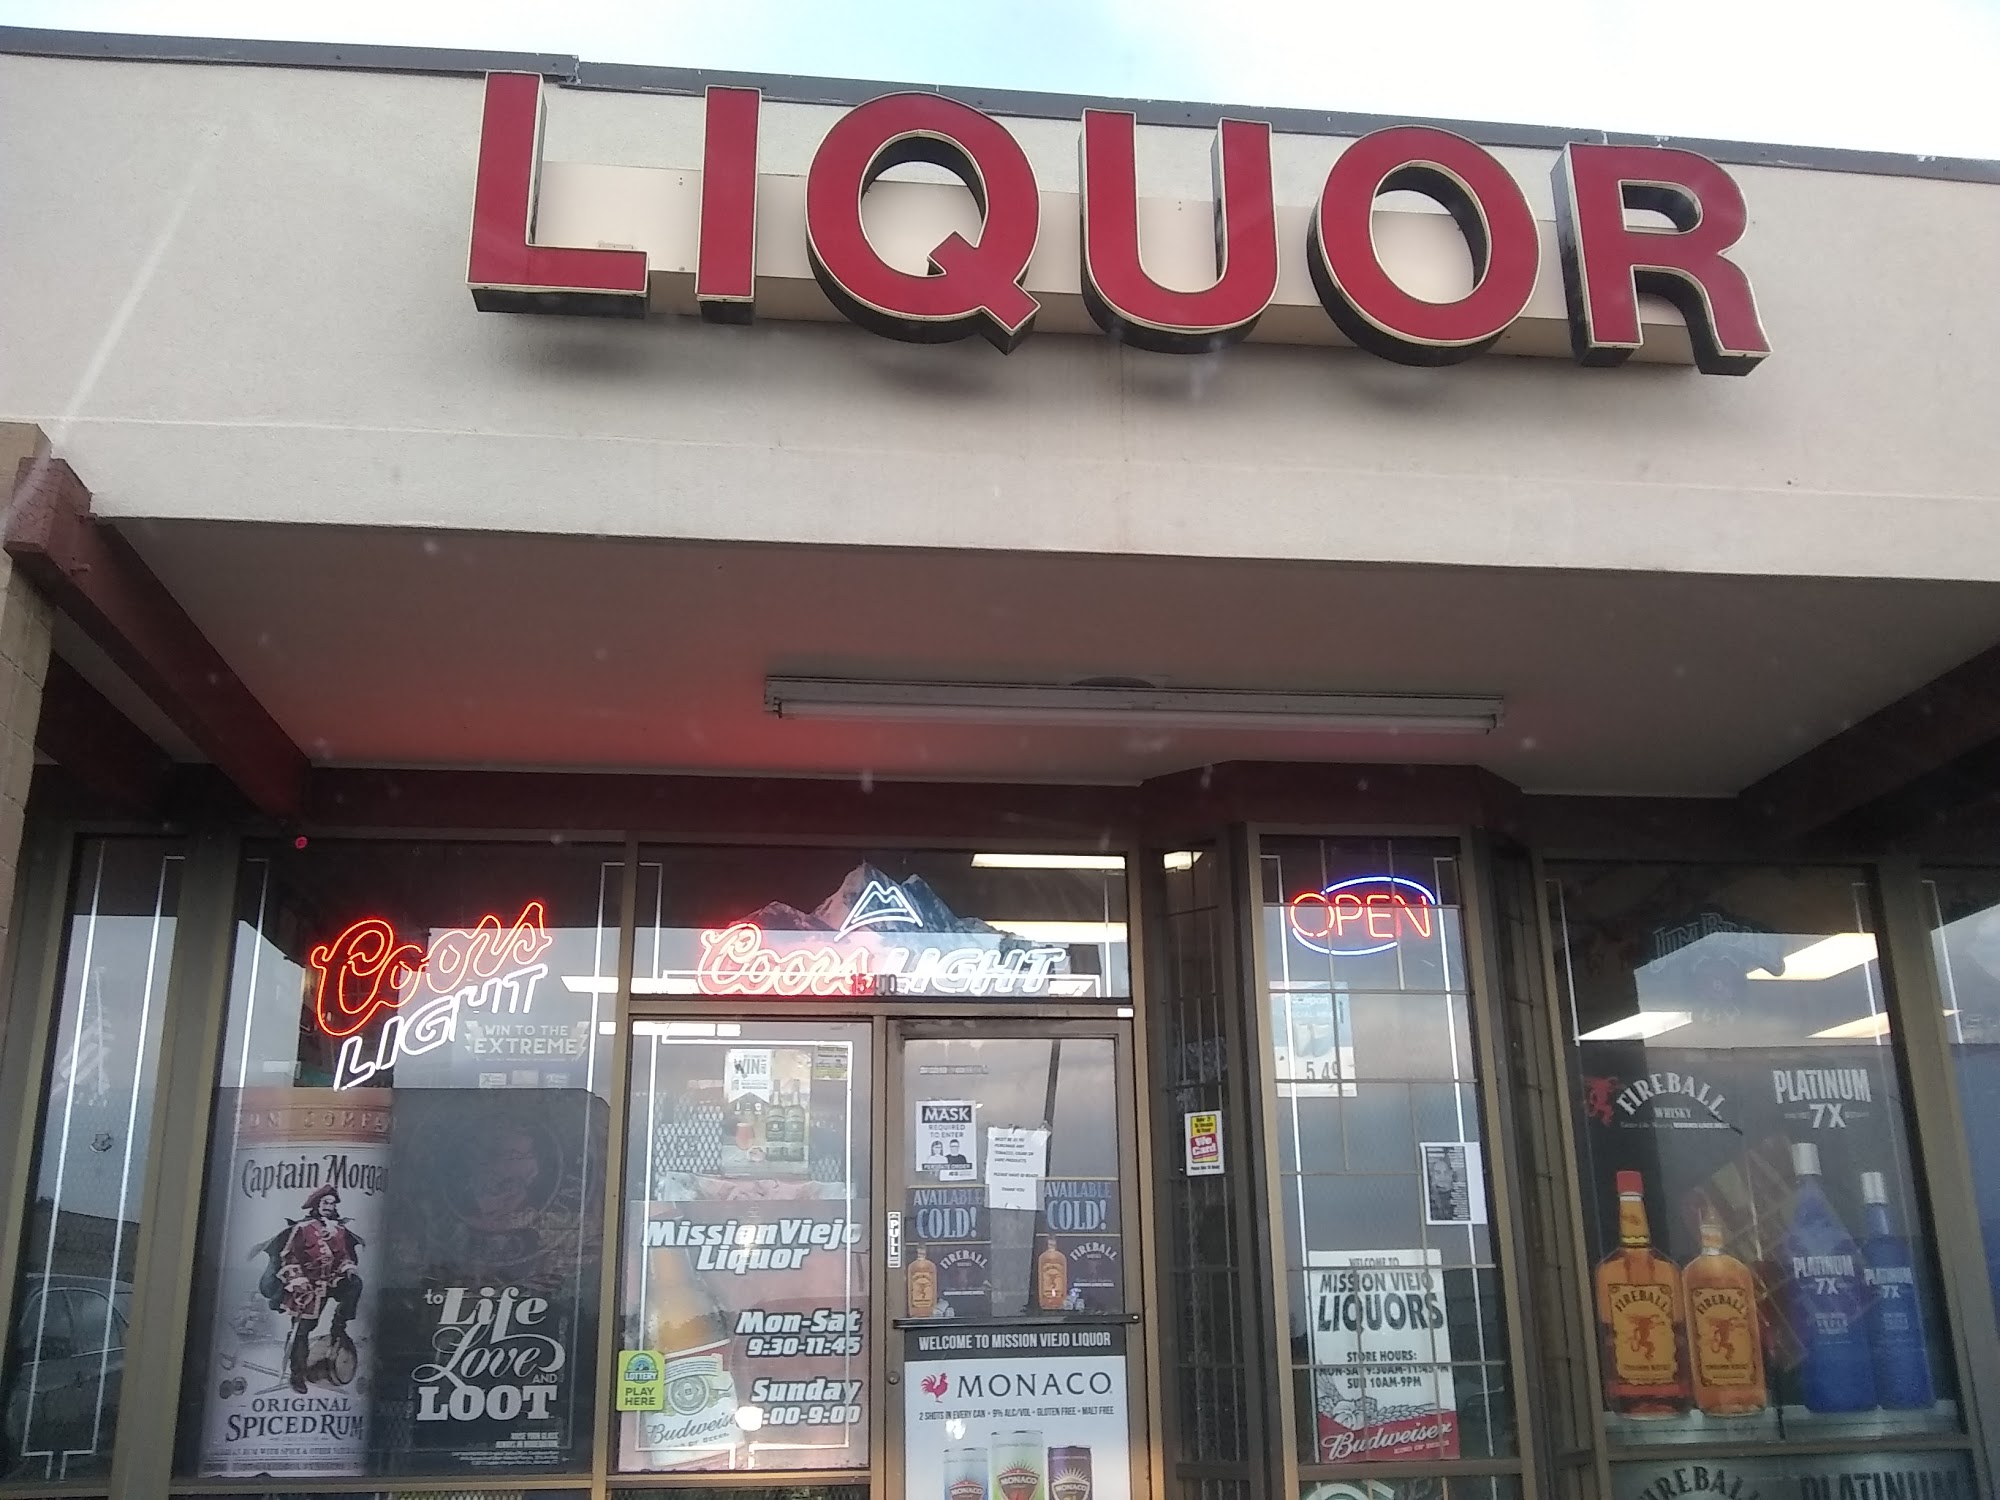 Mission Viejo Discount Liquor